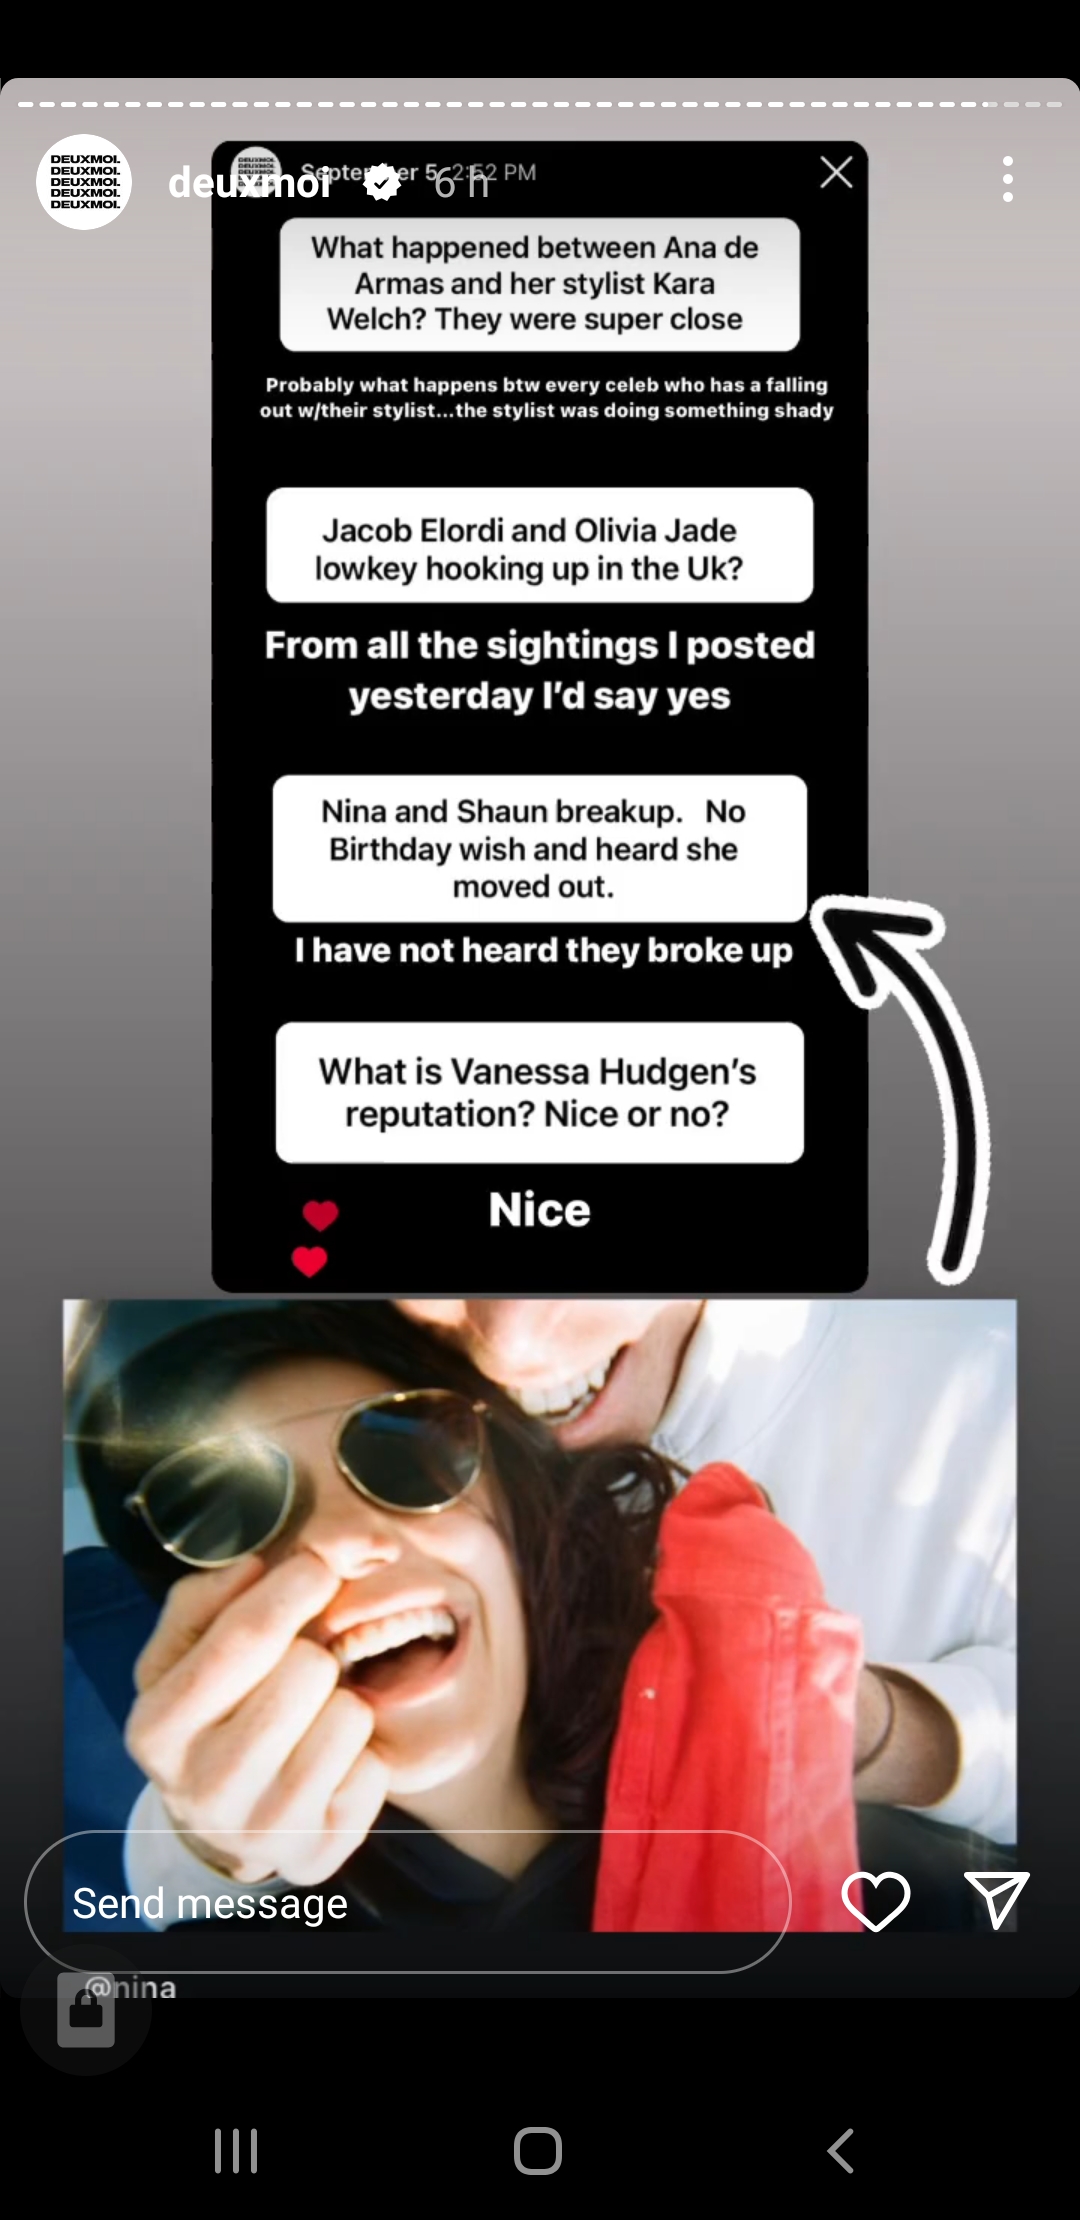 Deuxmoi responded to rumors about Nina Dobrev's break up with Shaun White